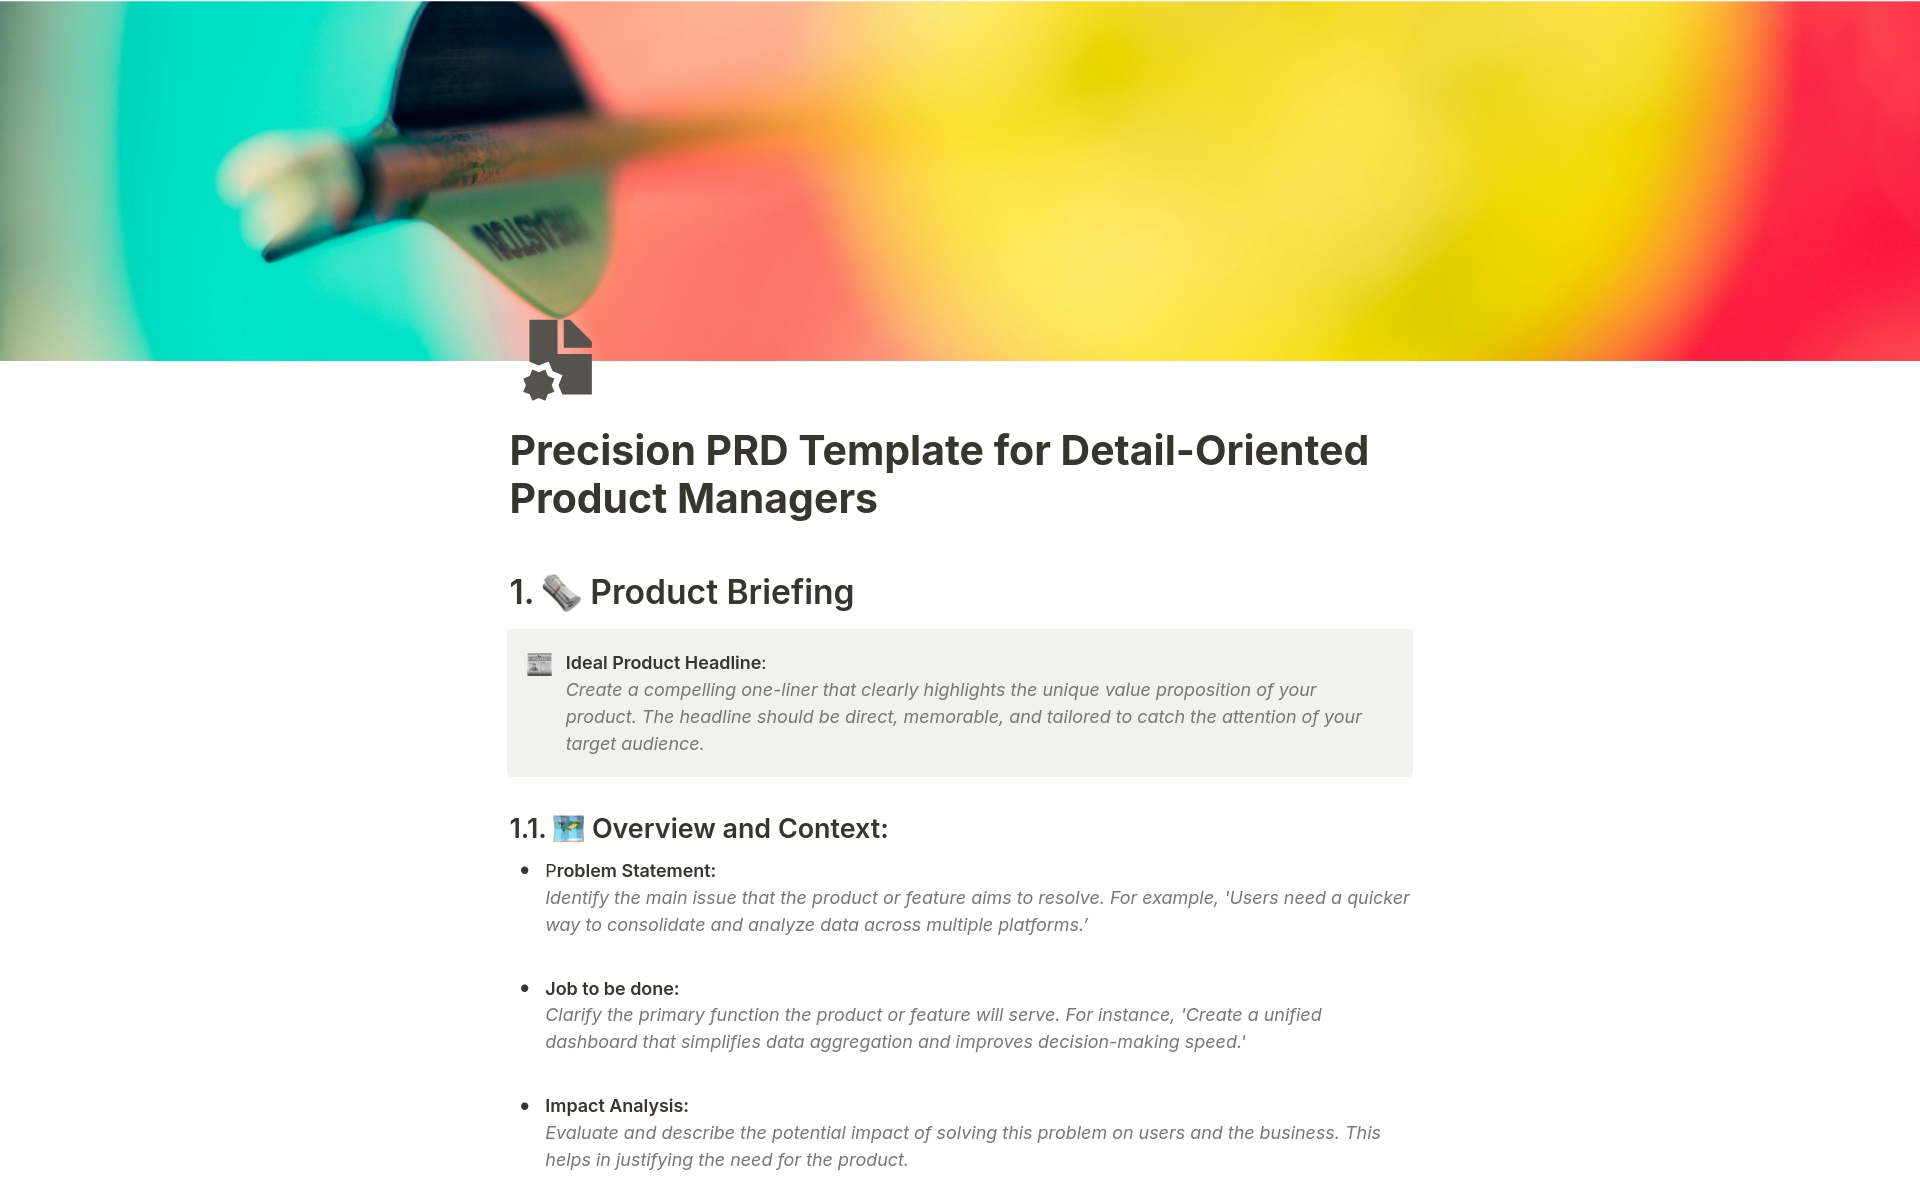 Precision PRD Template for Detail-Oriented PMs님의 템플릿 미리보기